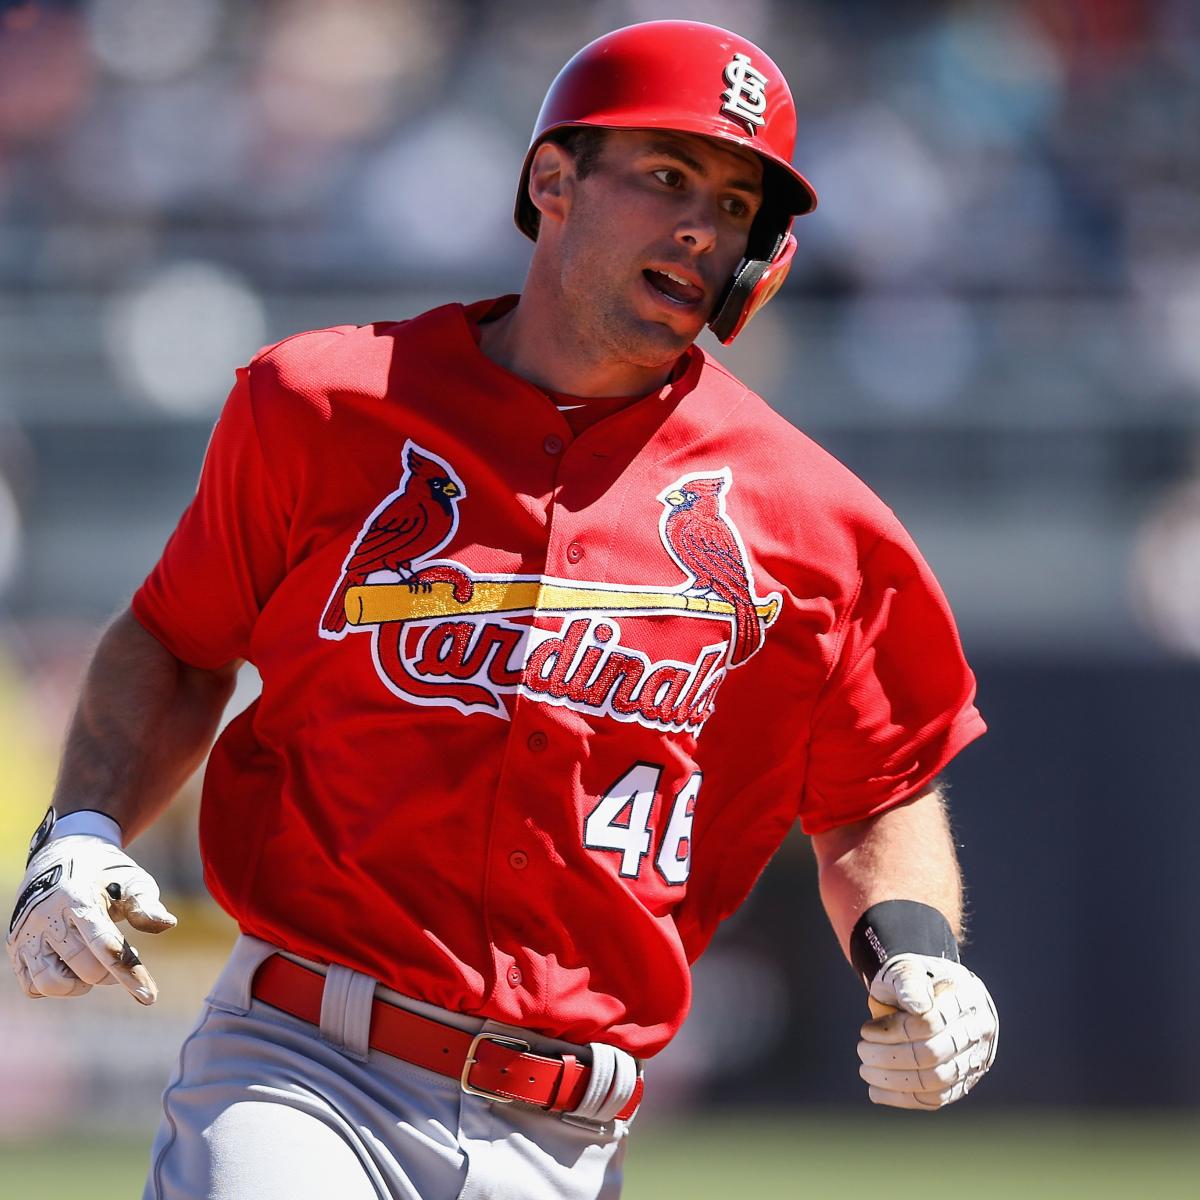 Report: Cardinals, Goldschmidt close on five-year, $130 million